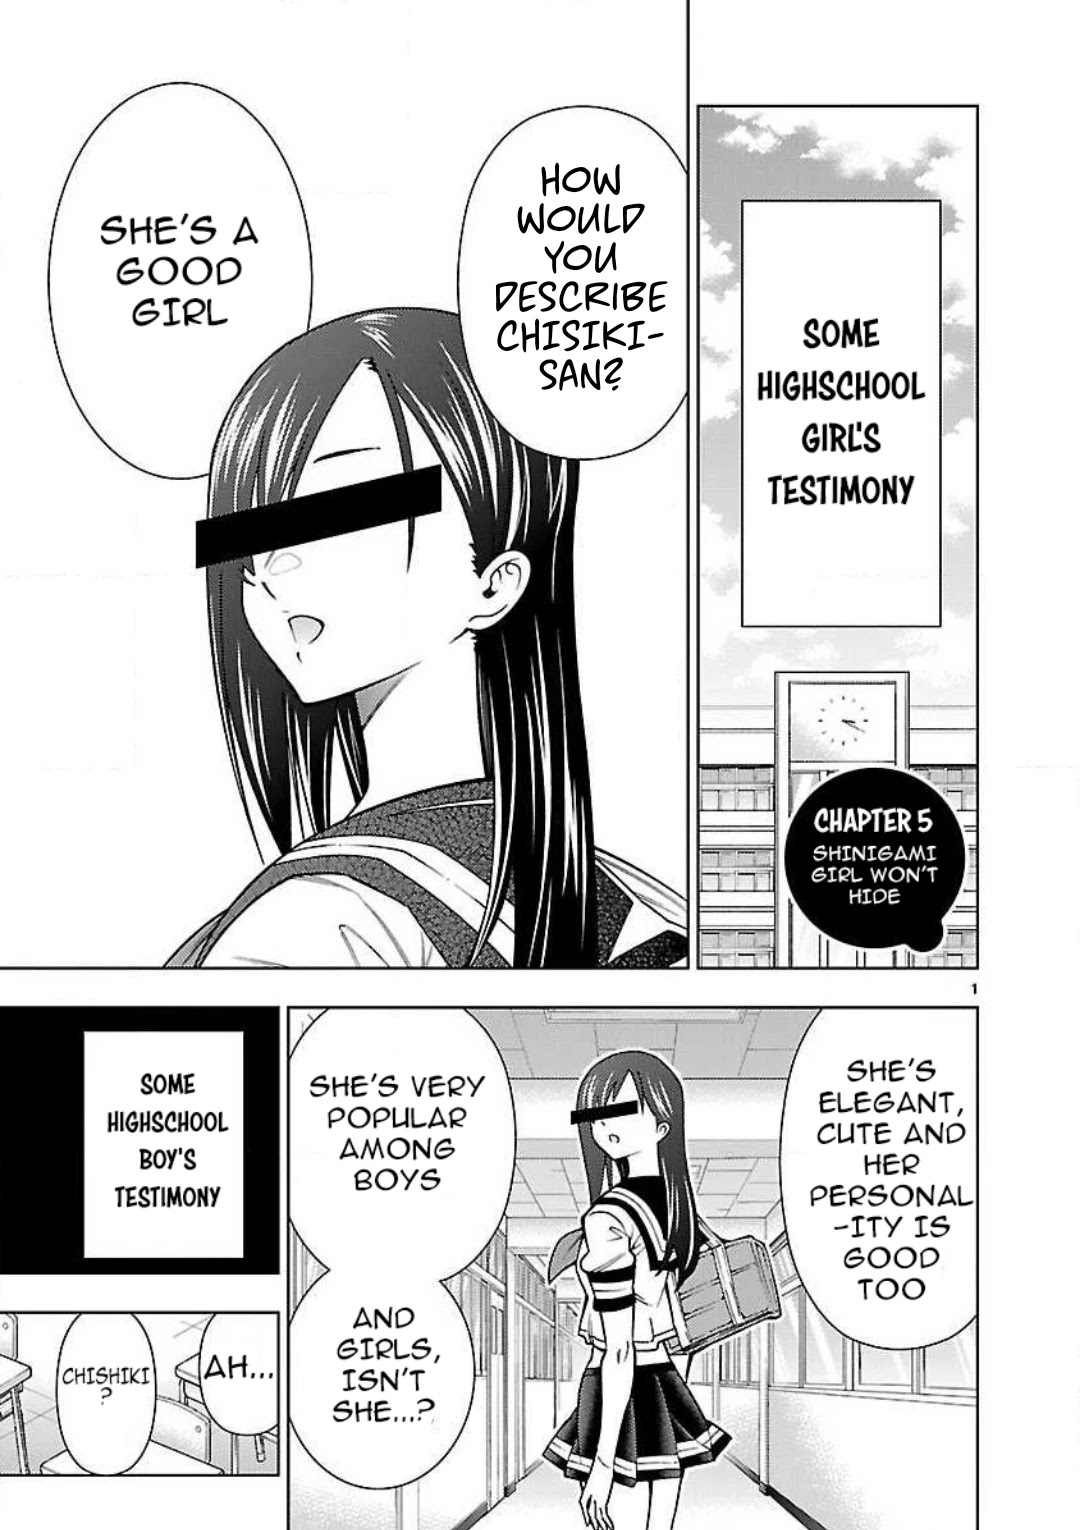 Shinigami Musume Ha Peropero Shitai Chapter 5: Shinigami Girl Won't Hide - Picture 2